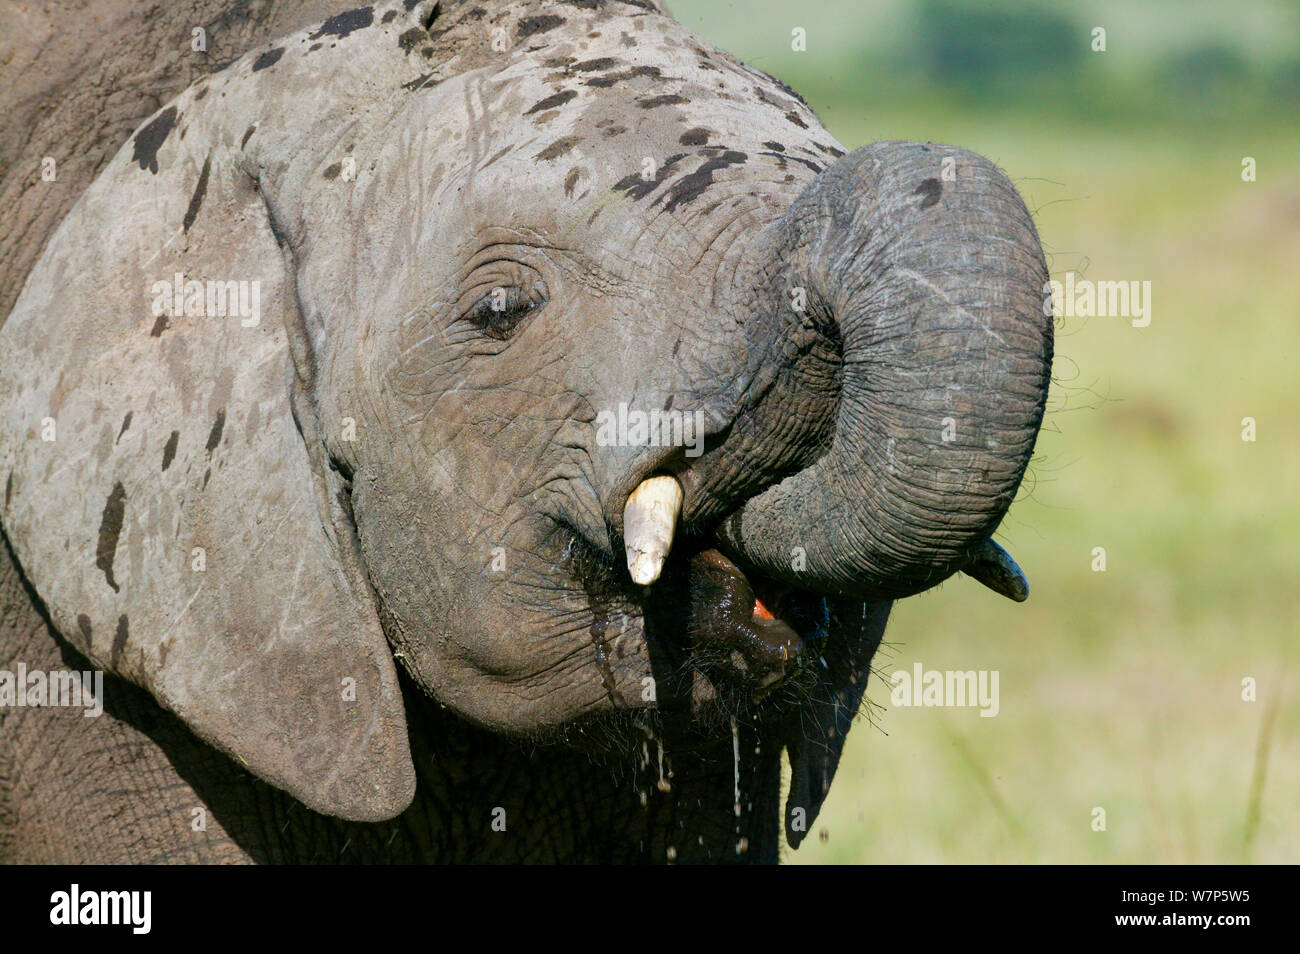 L'éléphant africain (Loxodonta africana), la consommation d'alcool. Masai-Mara Game Reserve, Kenya. Banque D'Images